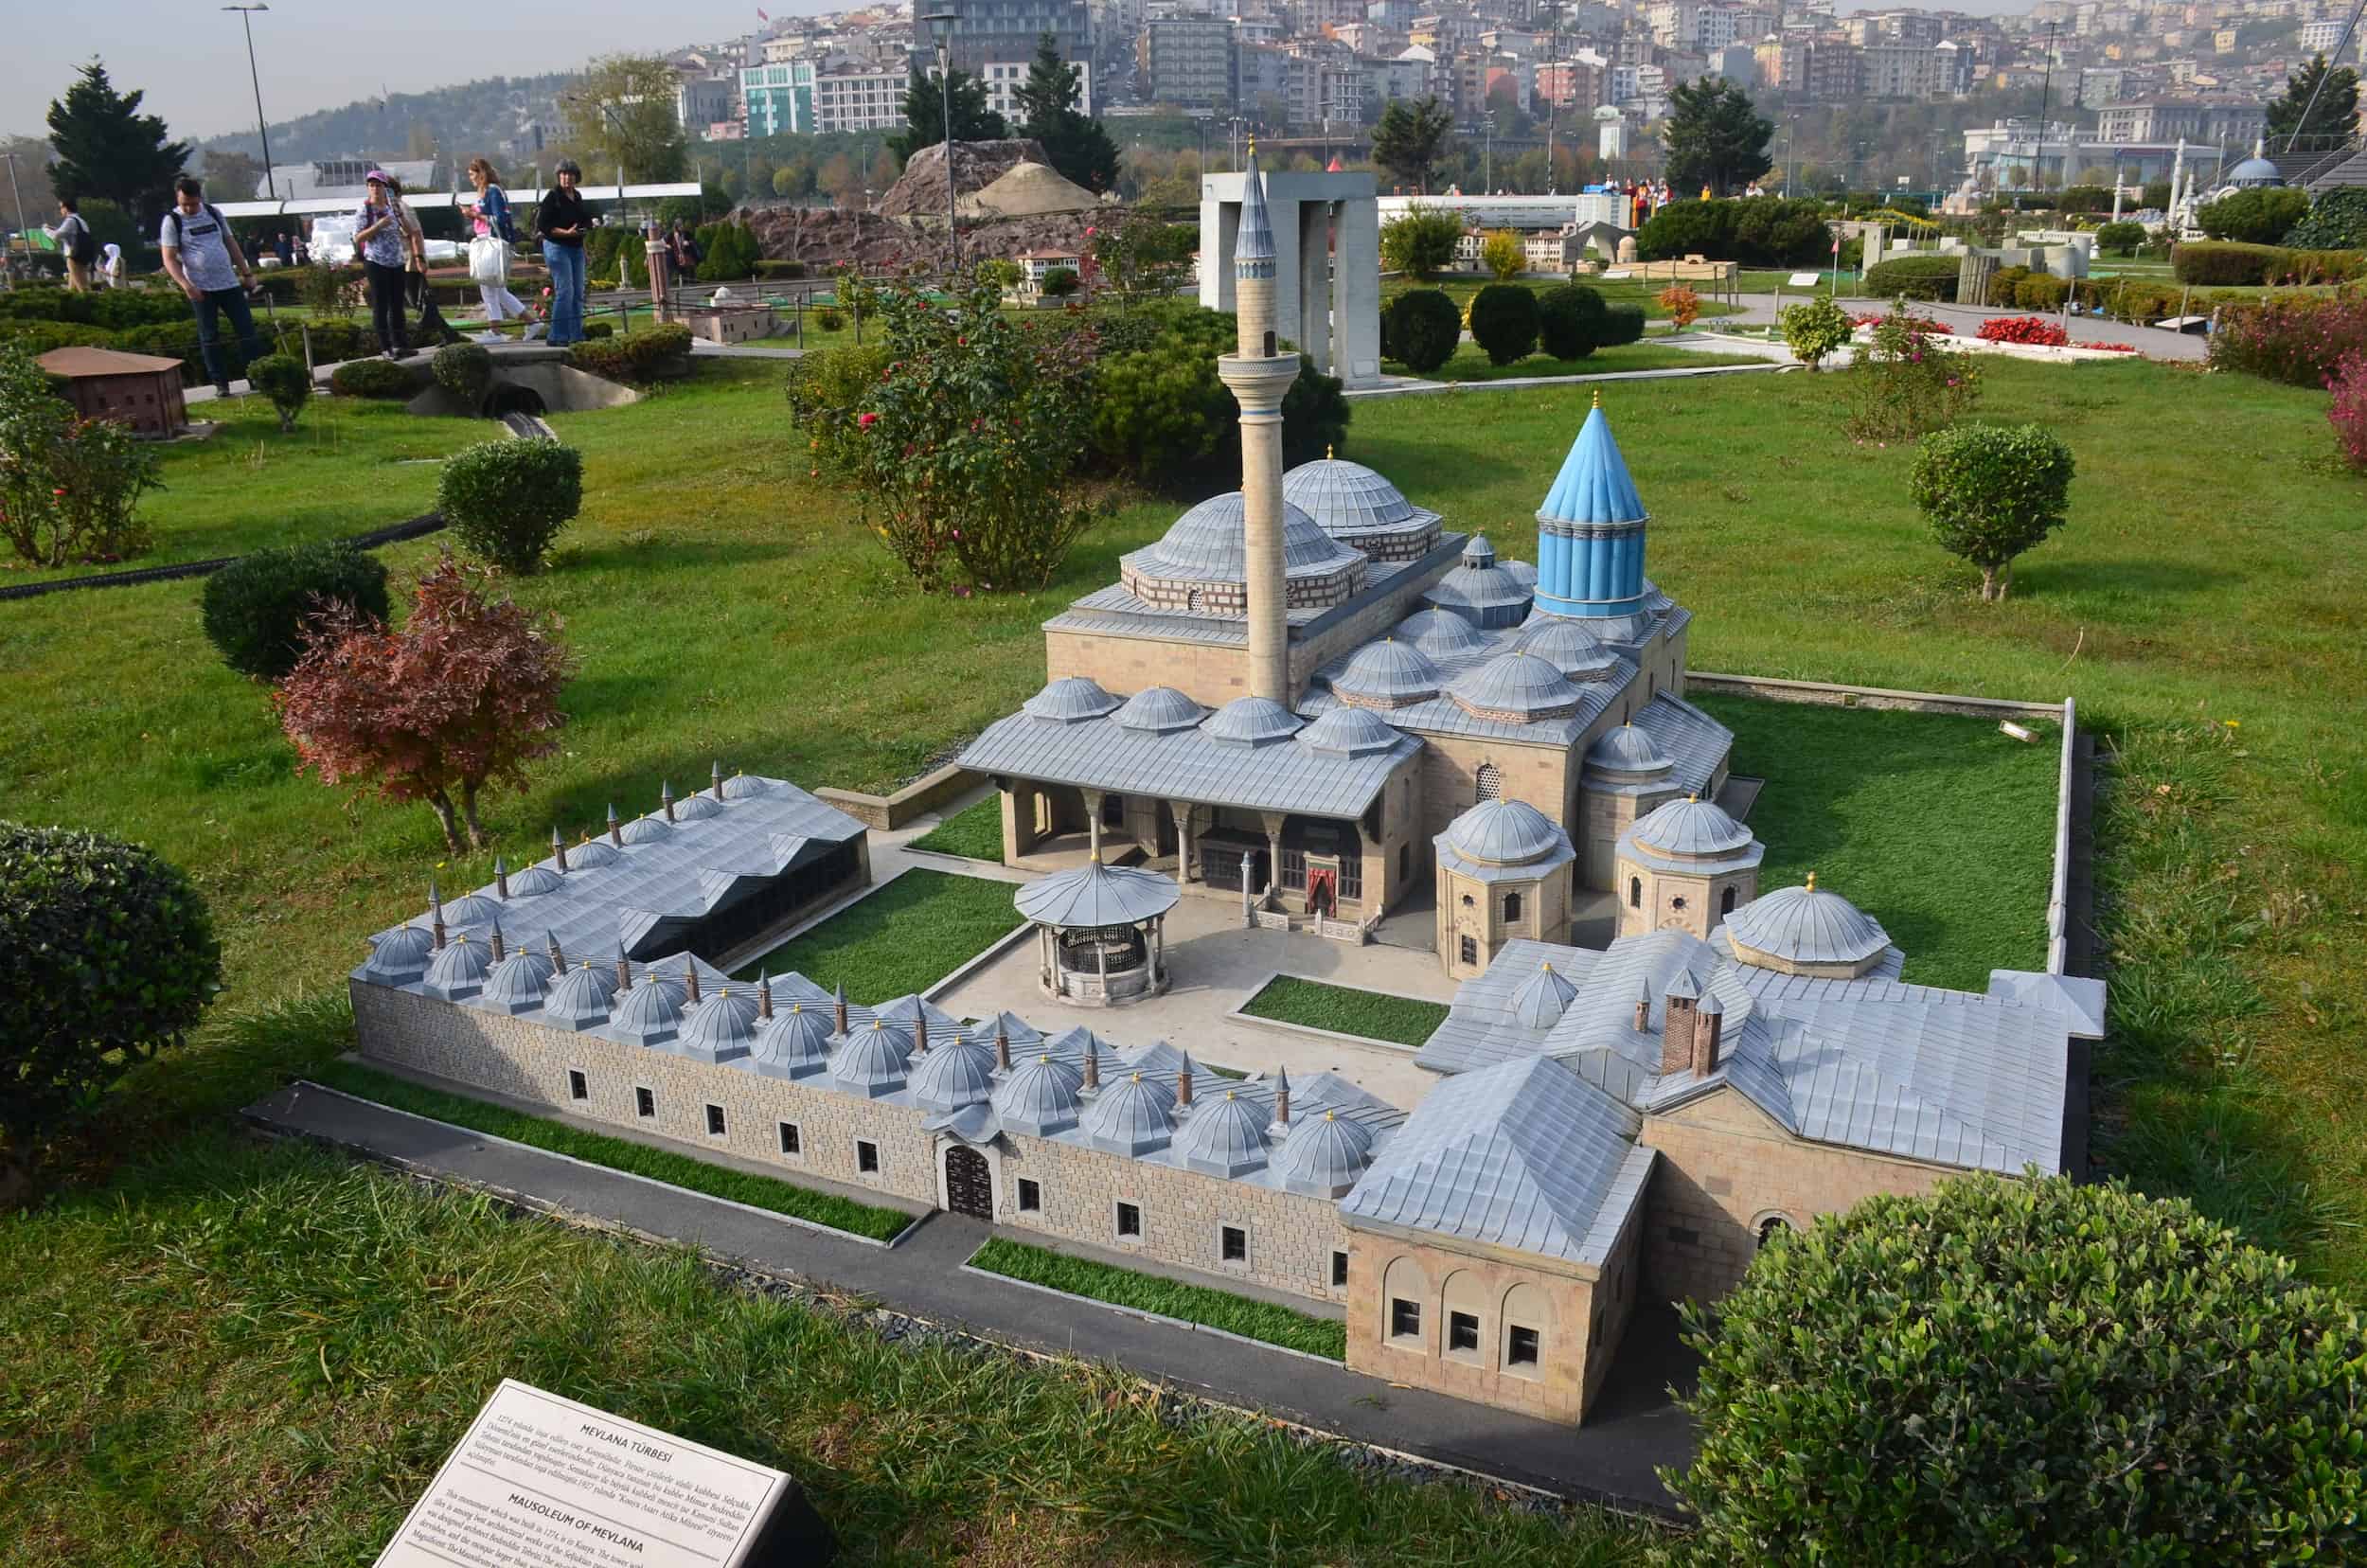 Model of the Mausoleum of Mevlana (Rumi), Konya, 13th century at Miniatürk in Istanbul, Turkey